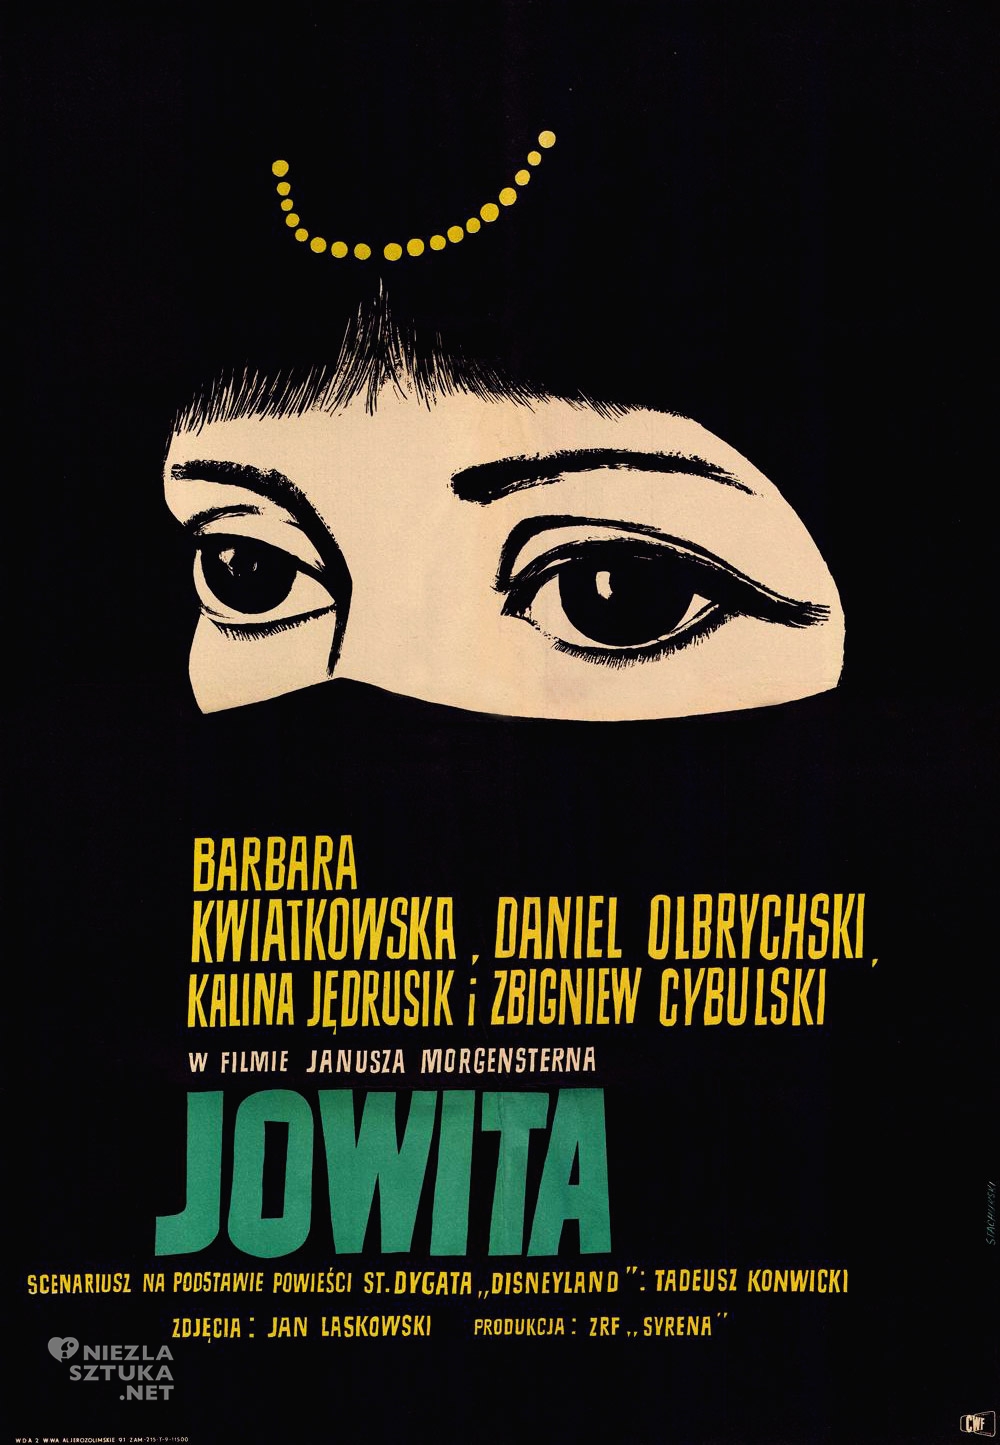 Marian Stachurski, Jowita film, plakat filmowy, niezła sztuka